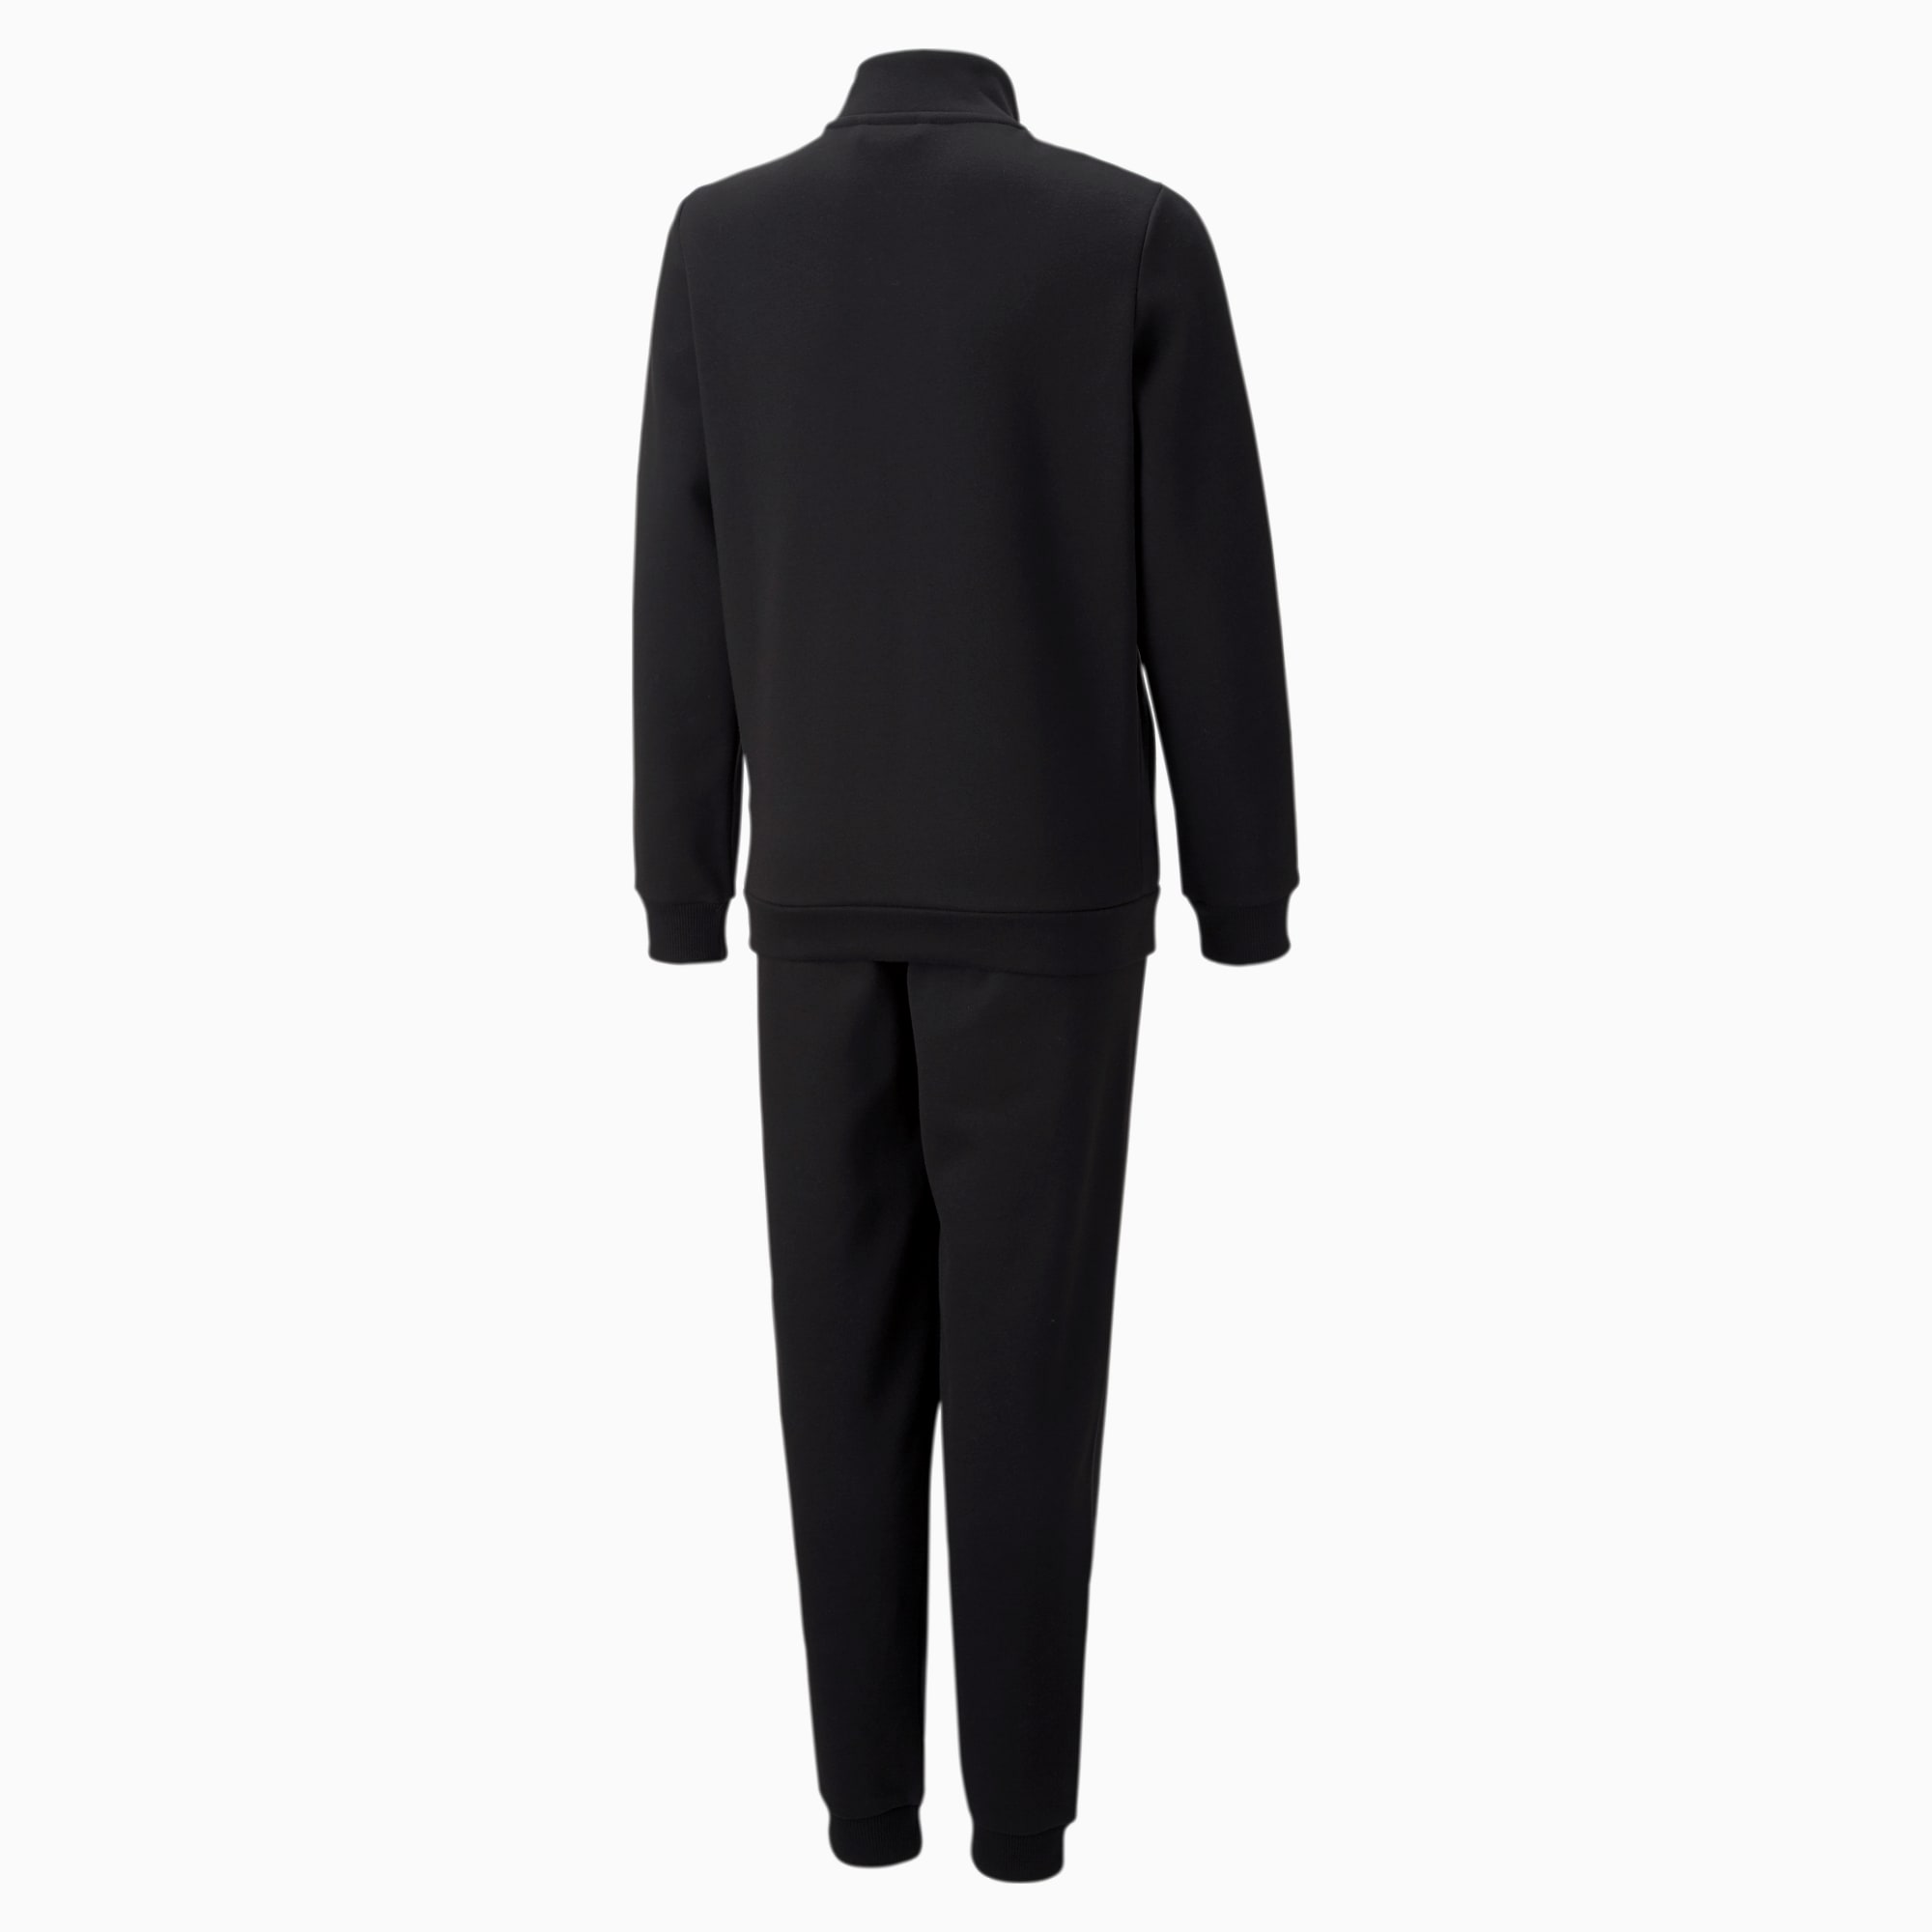 PUMA Tape Sweat Suit Youth, Black, Size 116, Clothing